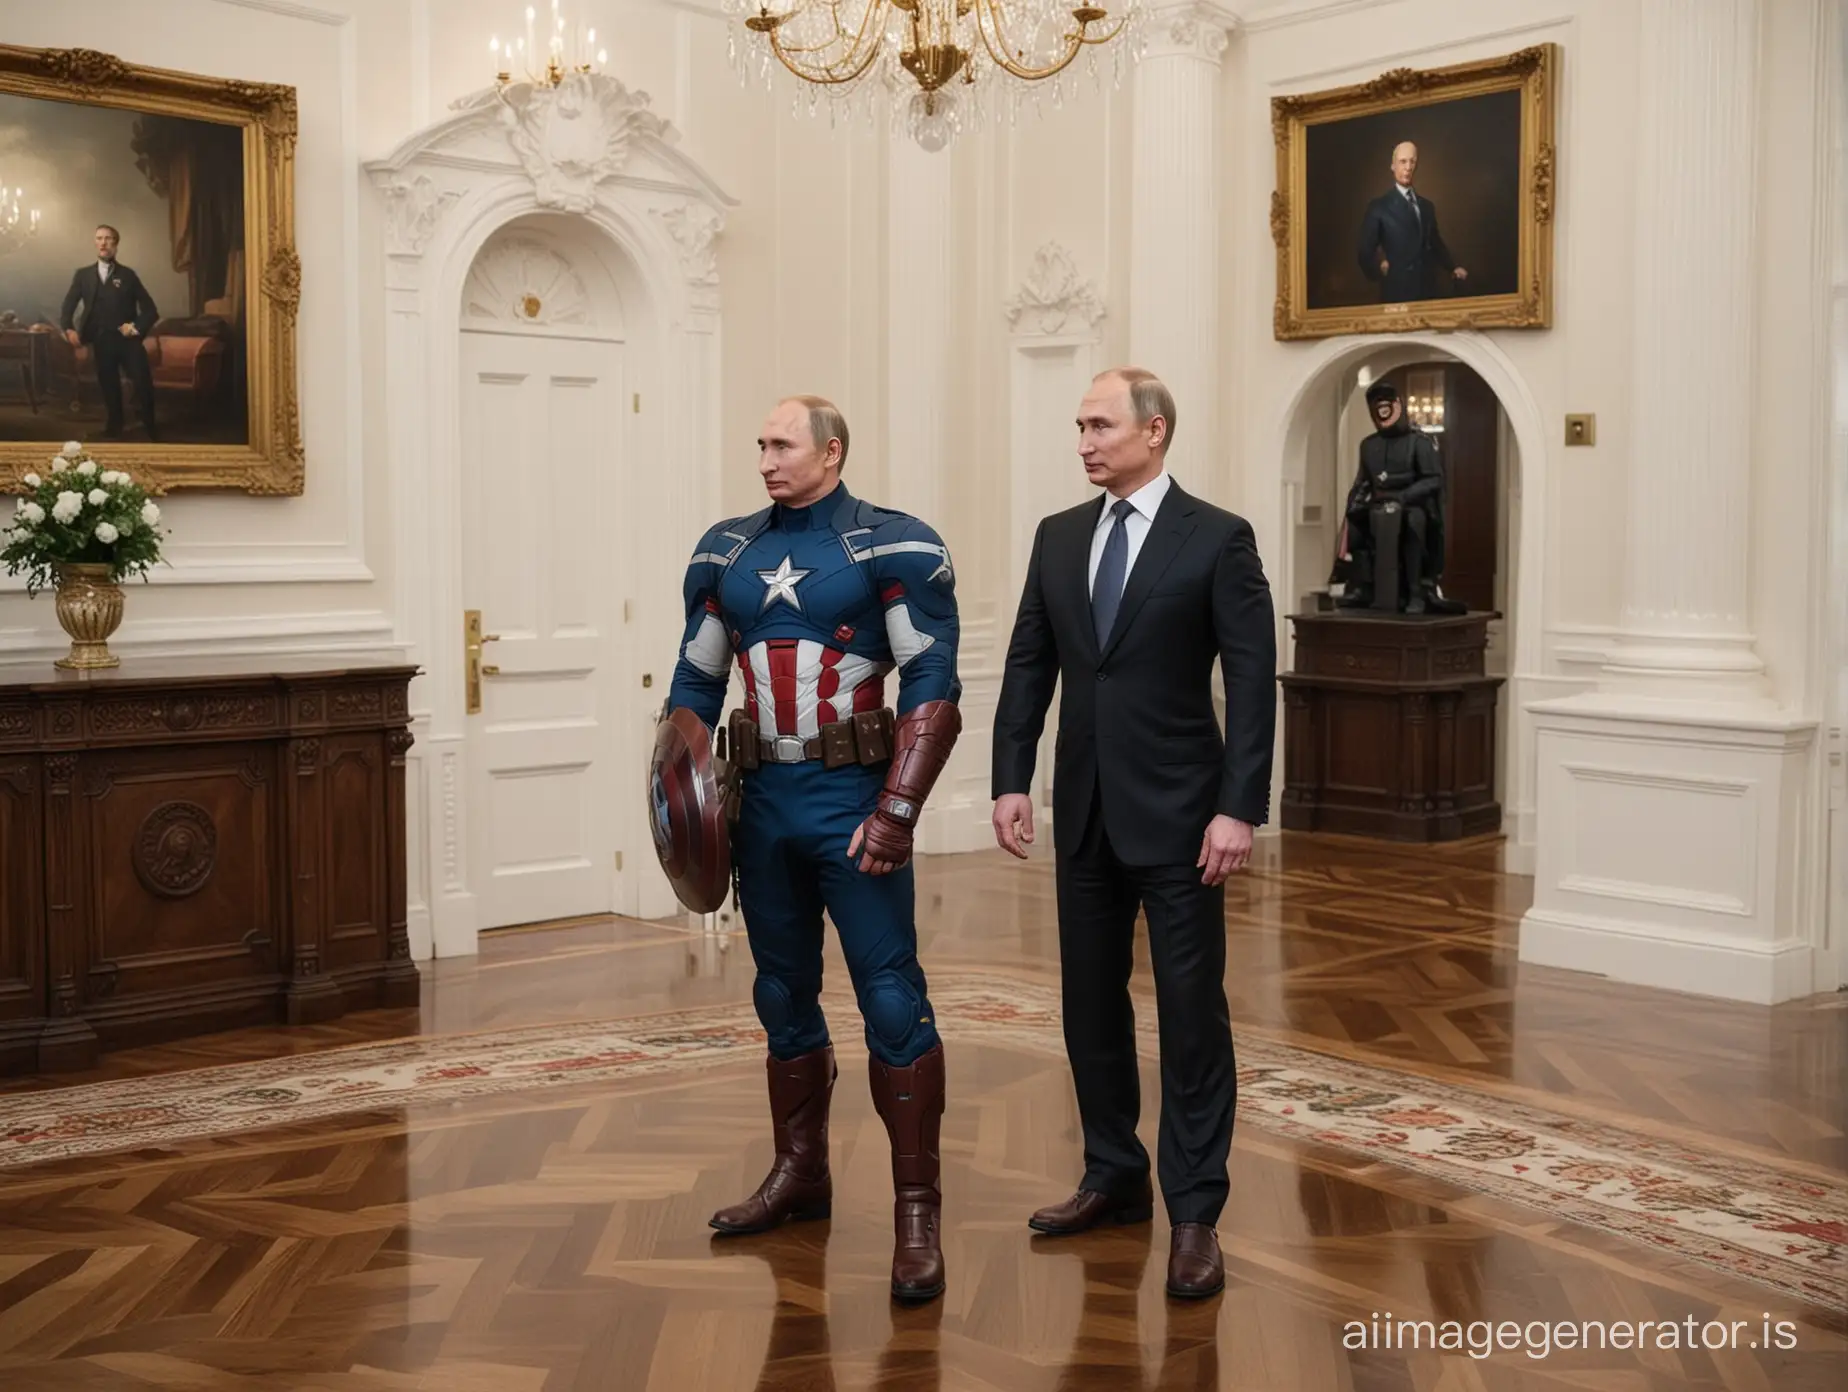 Vladimir Putin in suit of Captain America in White House